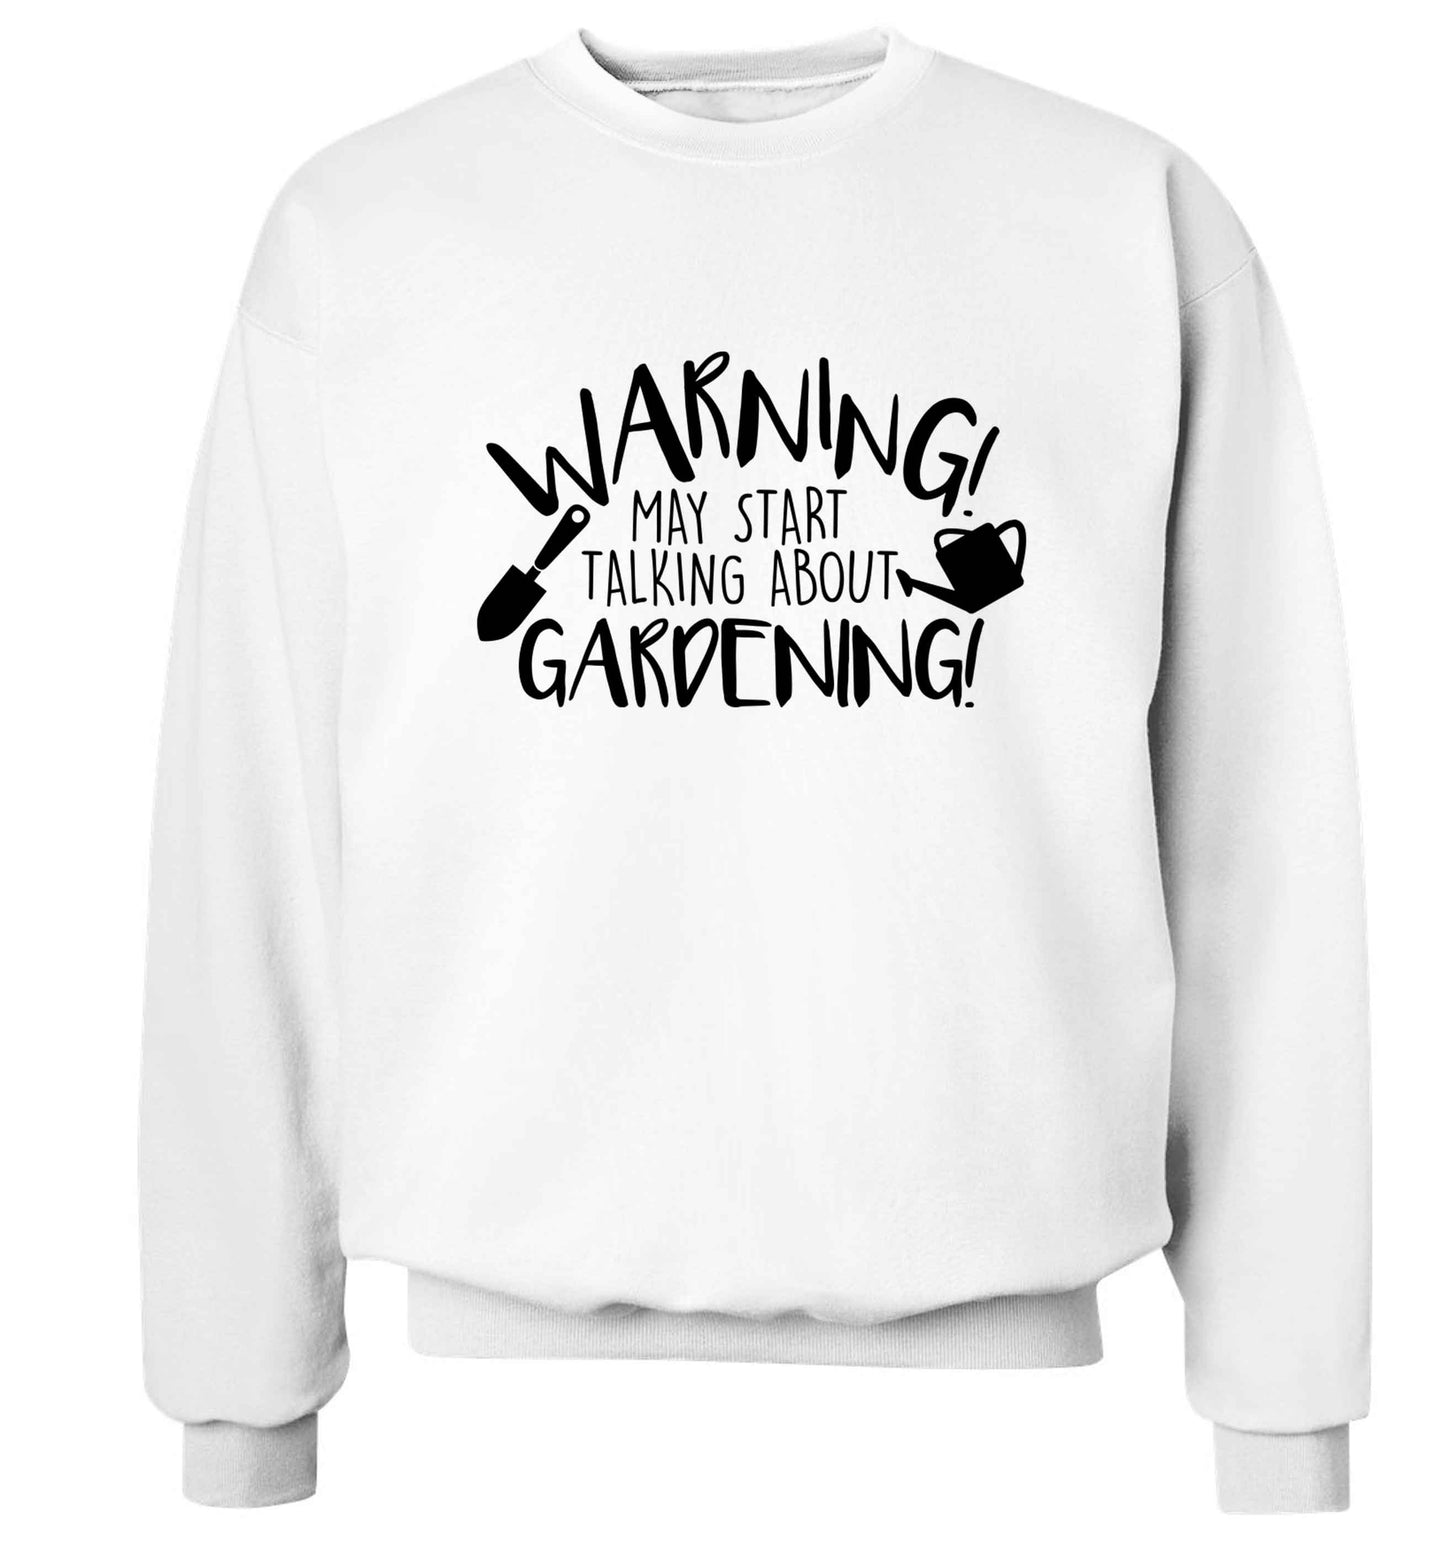 Warning may start talking about gardening Adult's unisex white Sweater 2XL